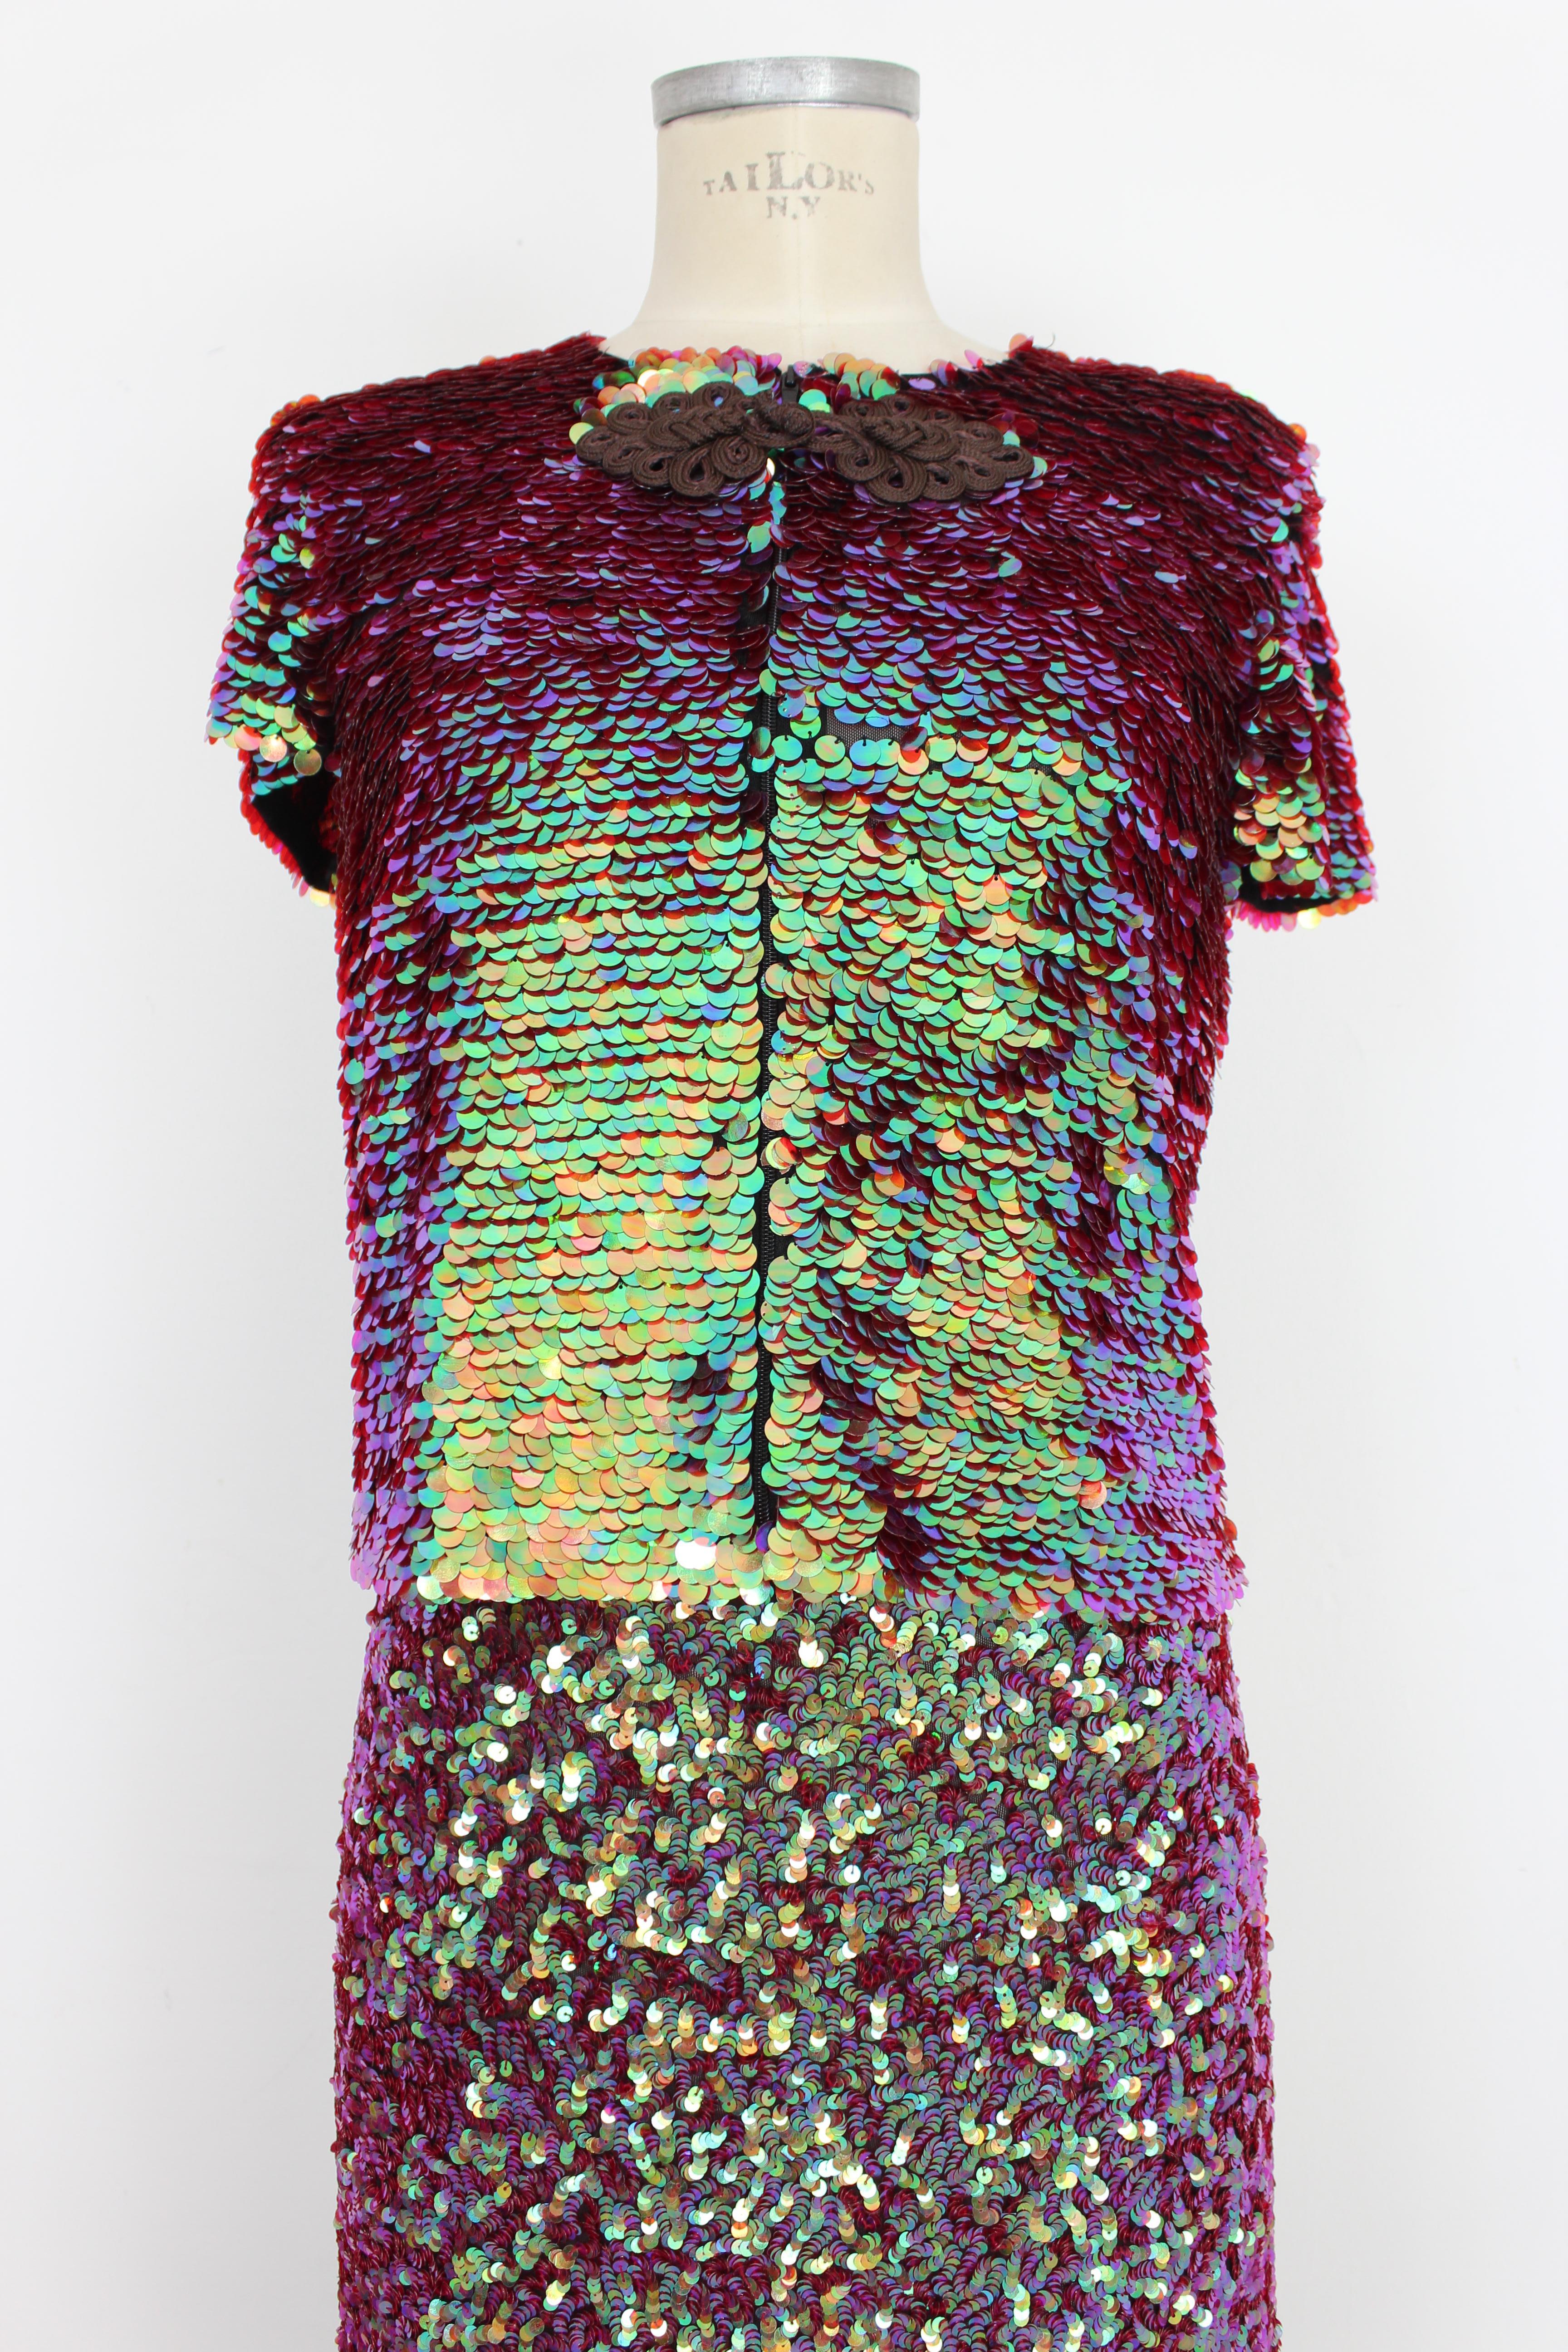 Jean Paul Gaultier Sequins Iridescent Multicolor Skirt Suit Cocktail Dress 1990s 3